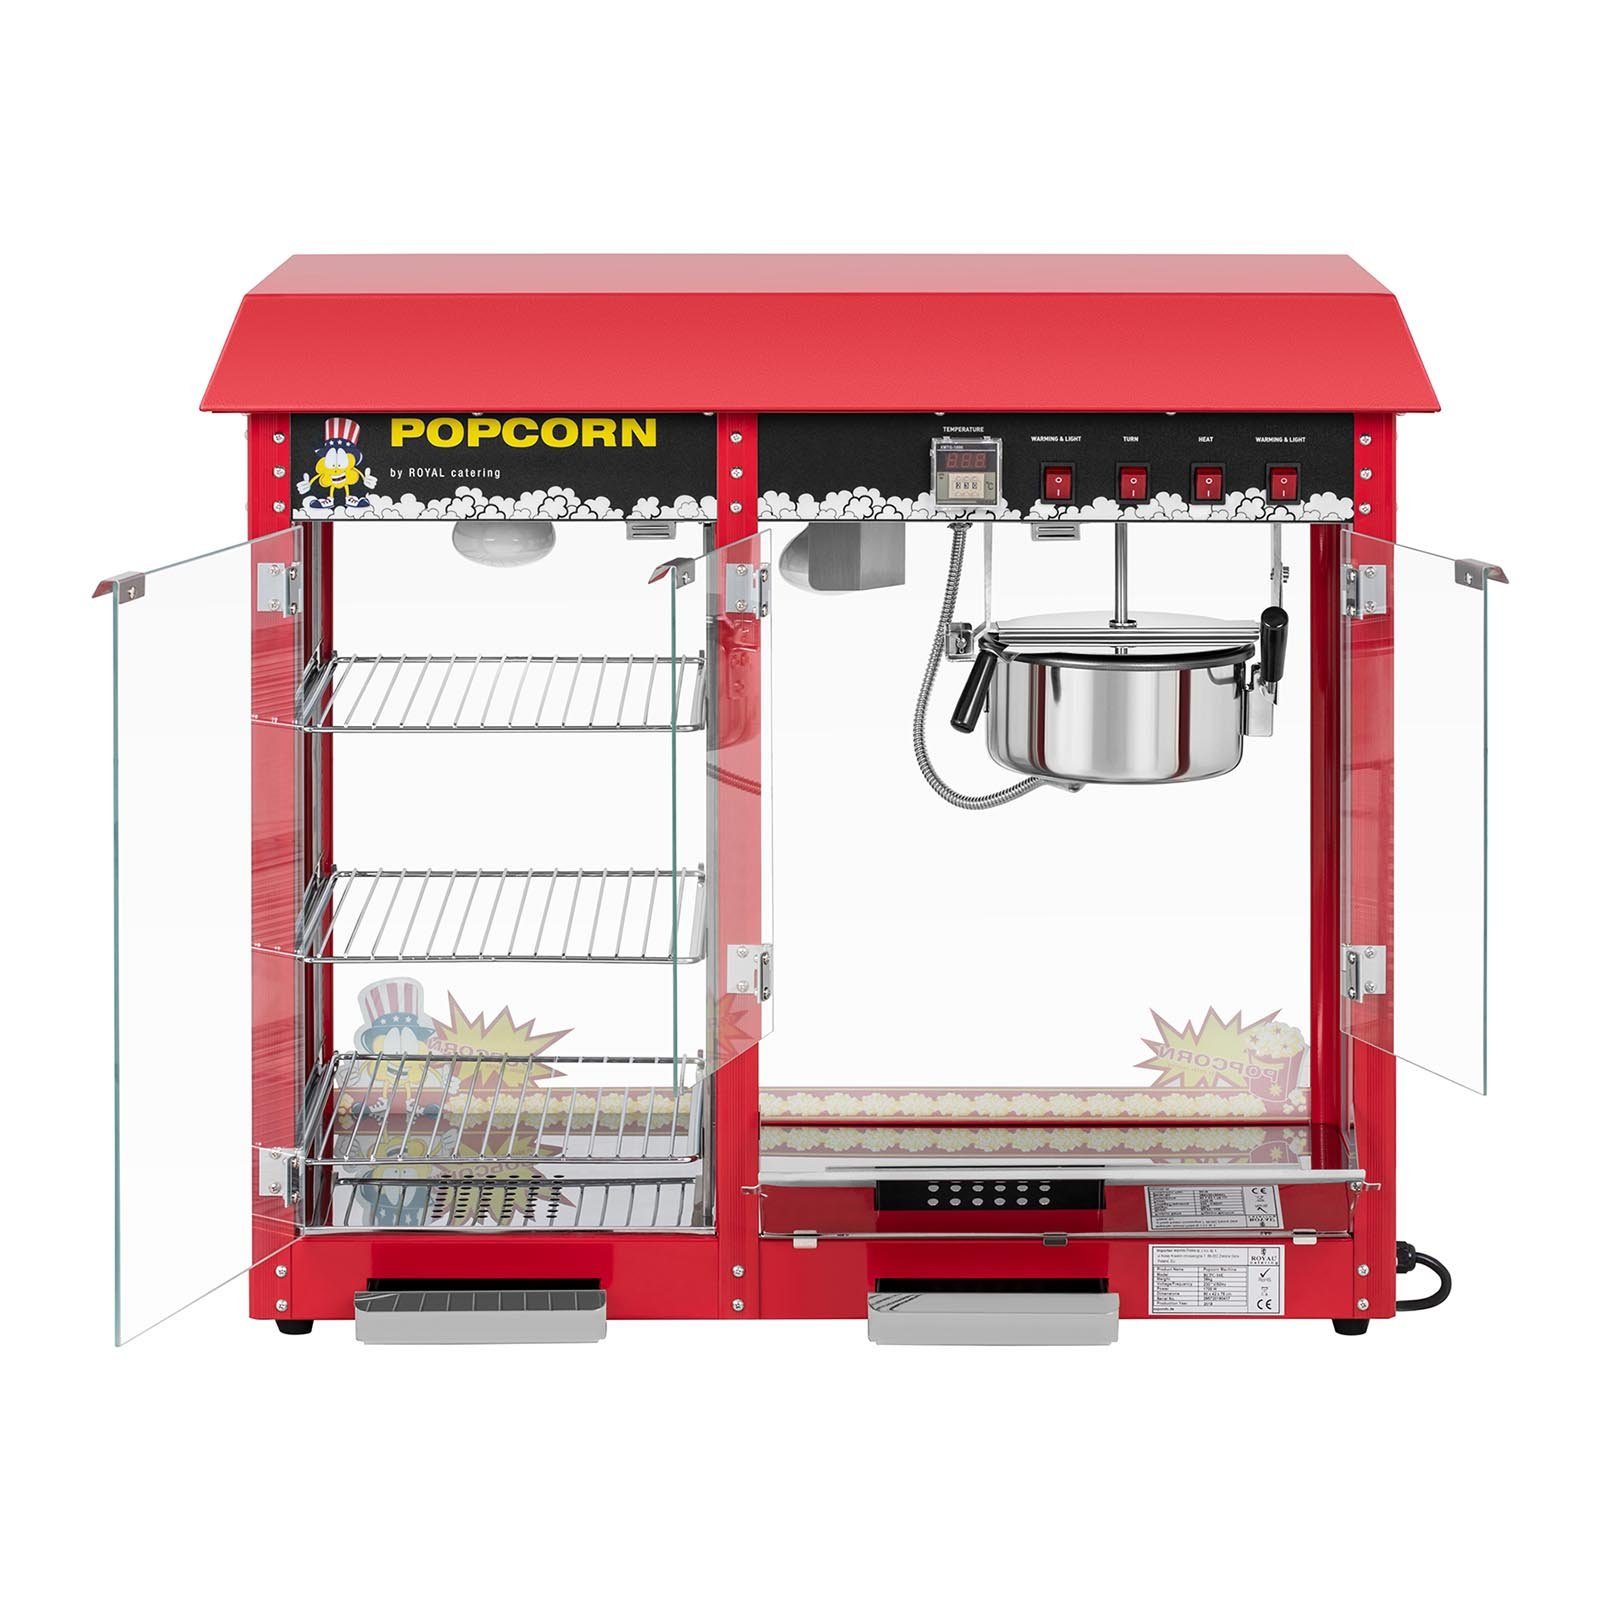 Popcornmaker Popcornmaschine beheizte Royal 1700W Popcornautomat Catering Popcornmaschine 5kg/h